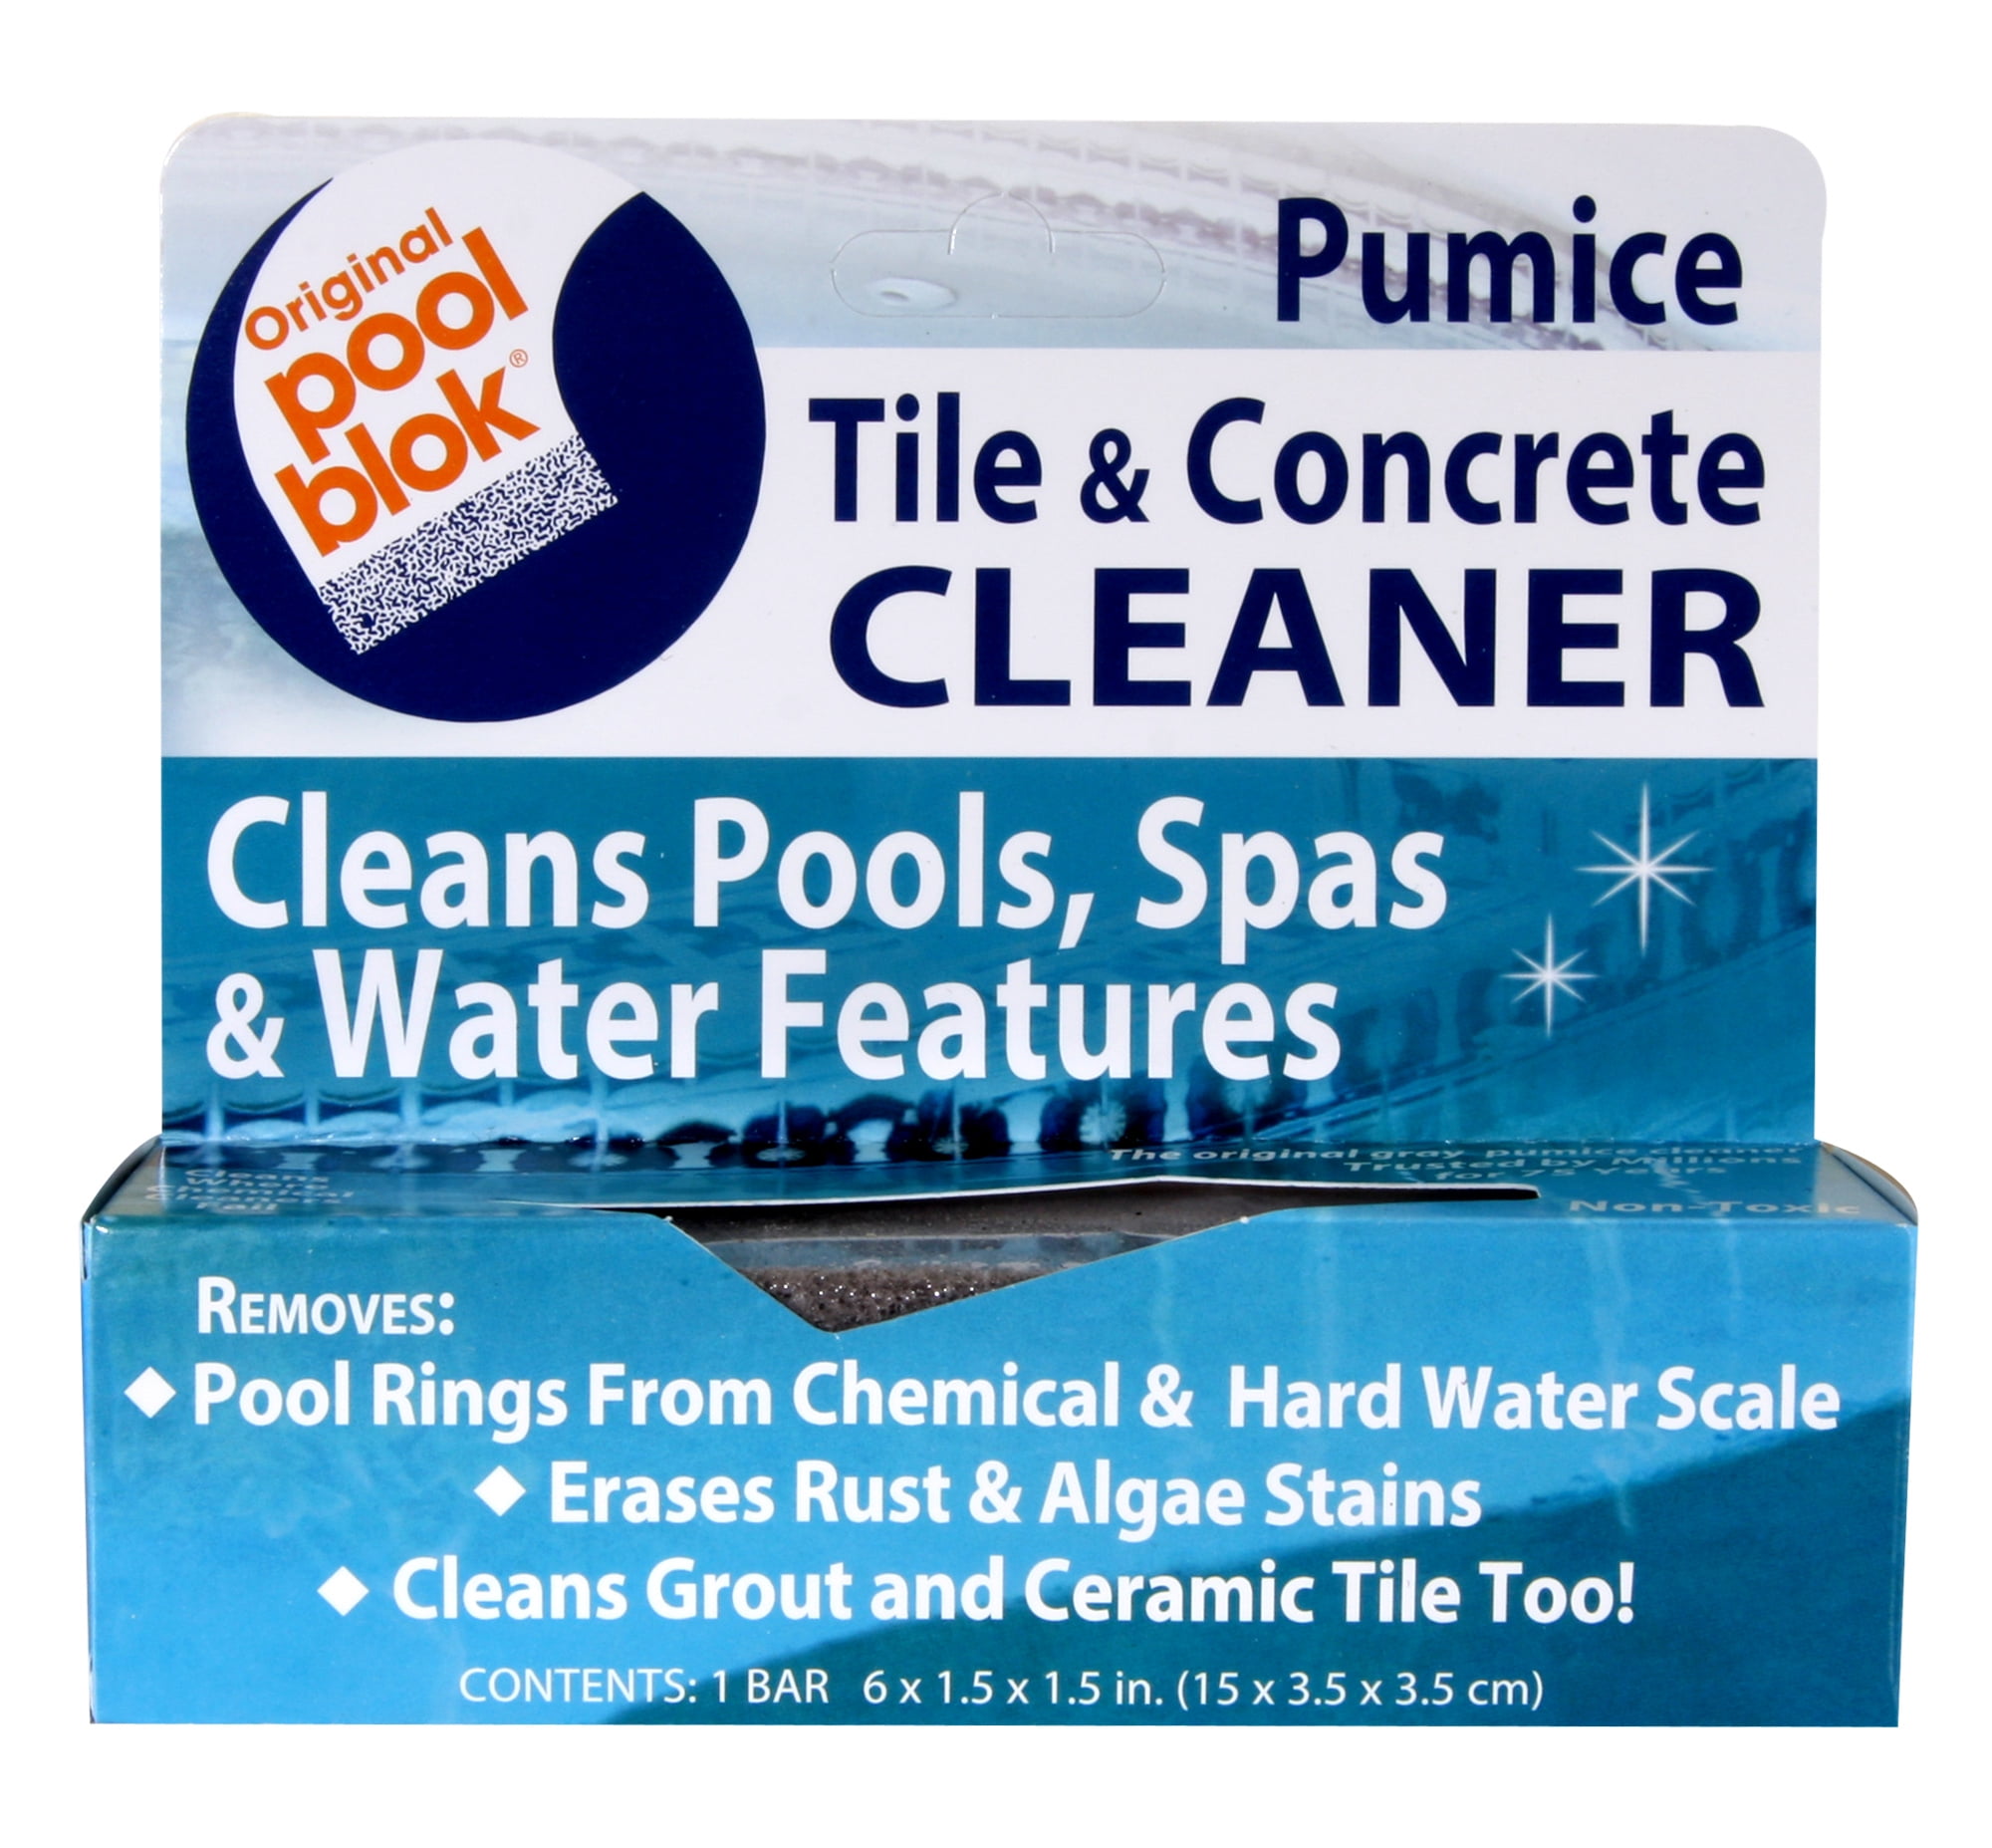 Pool Blok Pumice Tile & Concrete Cleaner